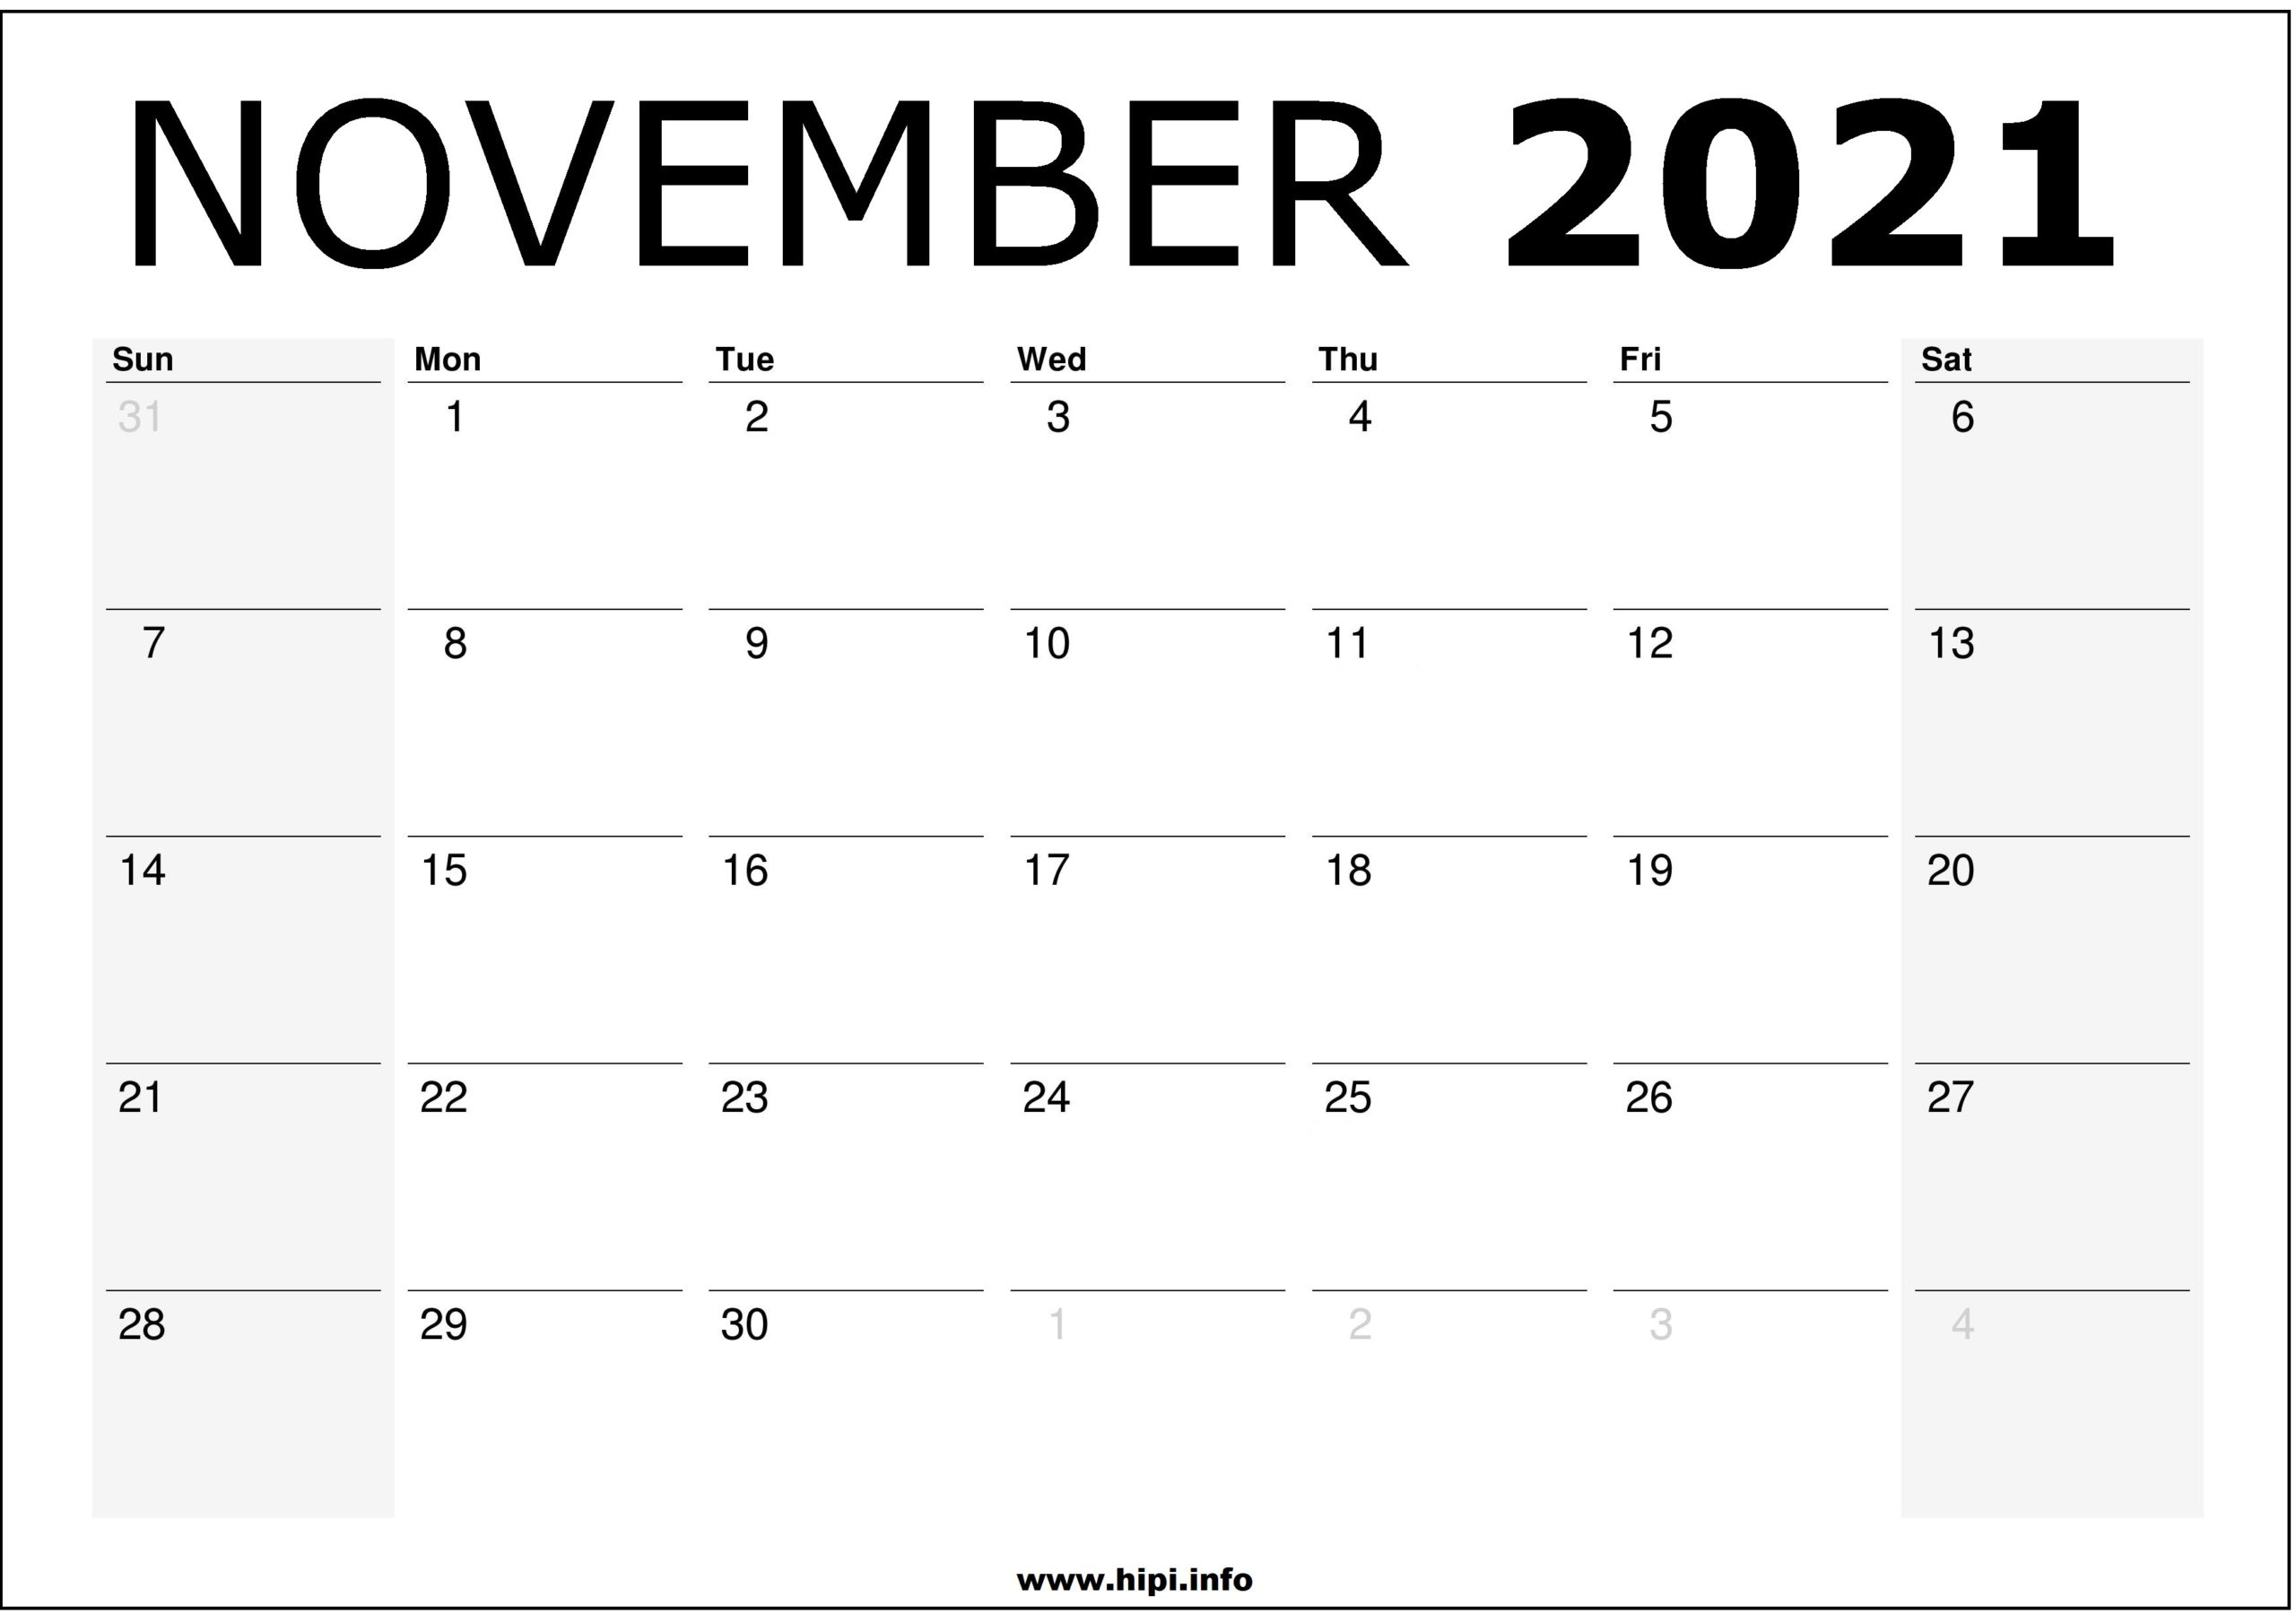 November 2021 Calendar Printable - Monthly Calendar Free November 2020 To November 2021 Calendar